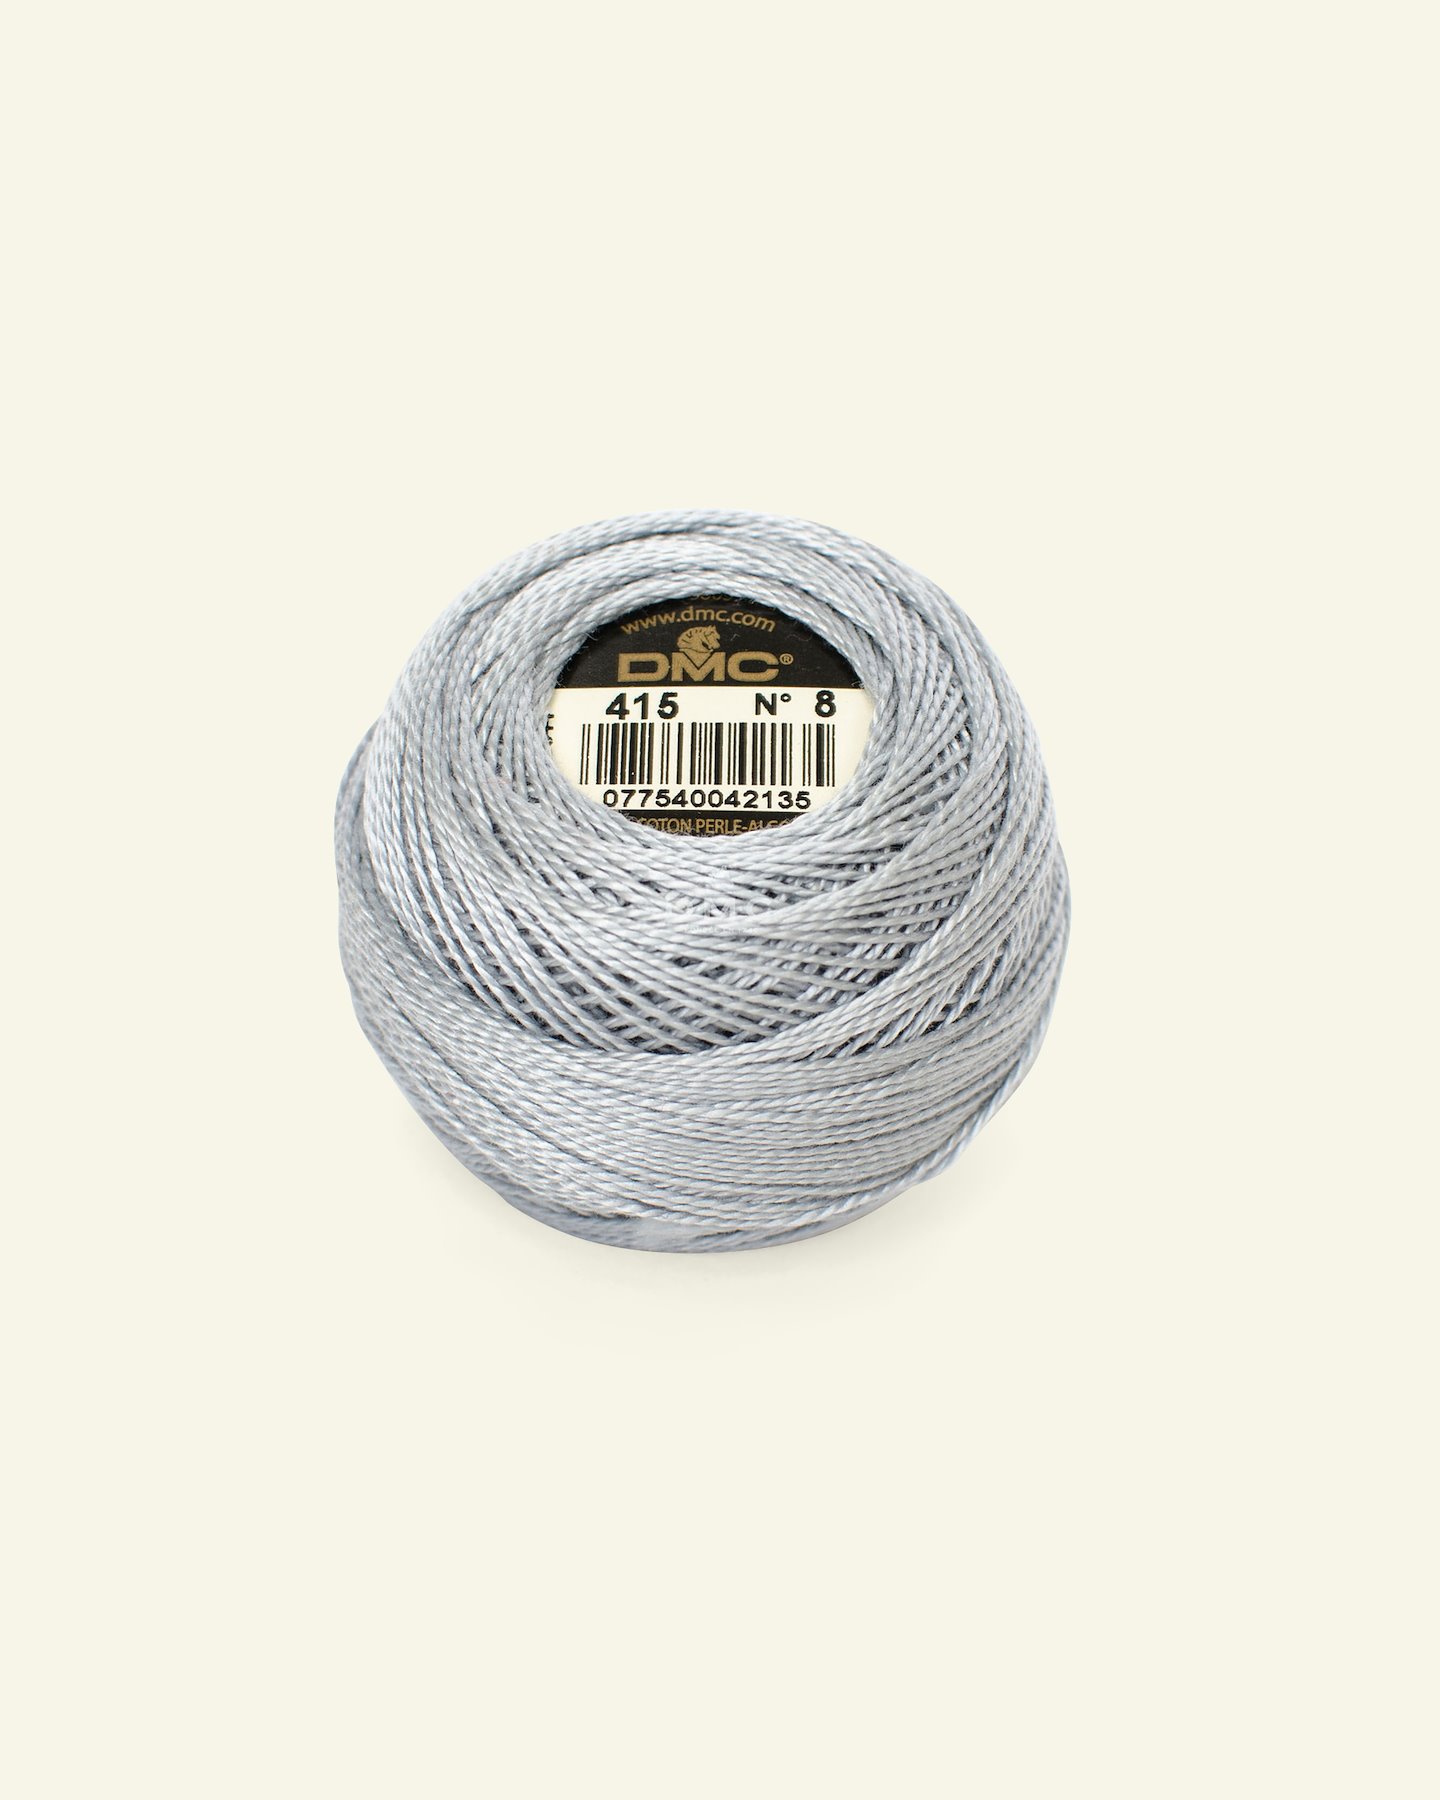 DMC Pearl Cotton yarn col. 415 35121_pack